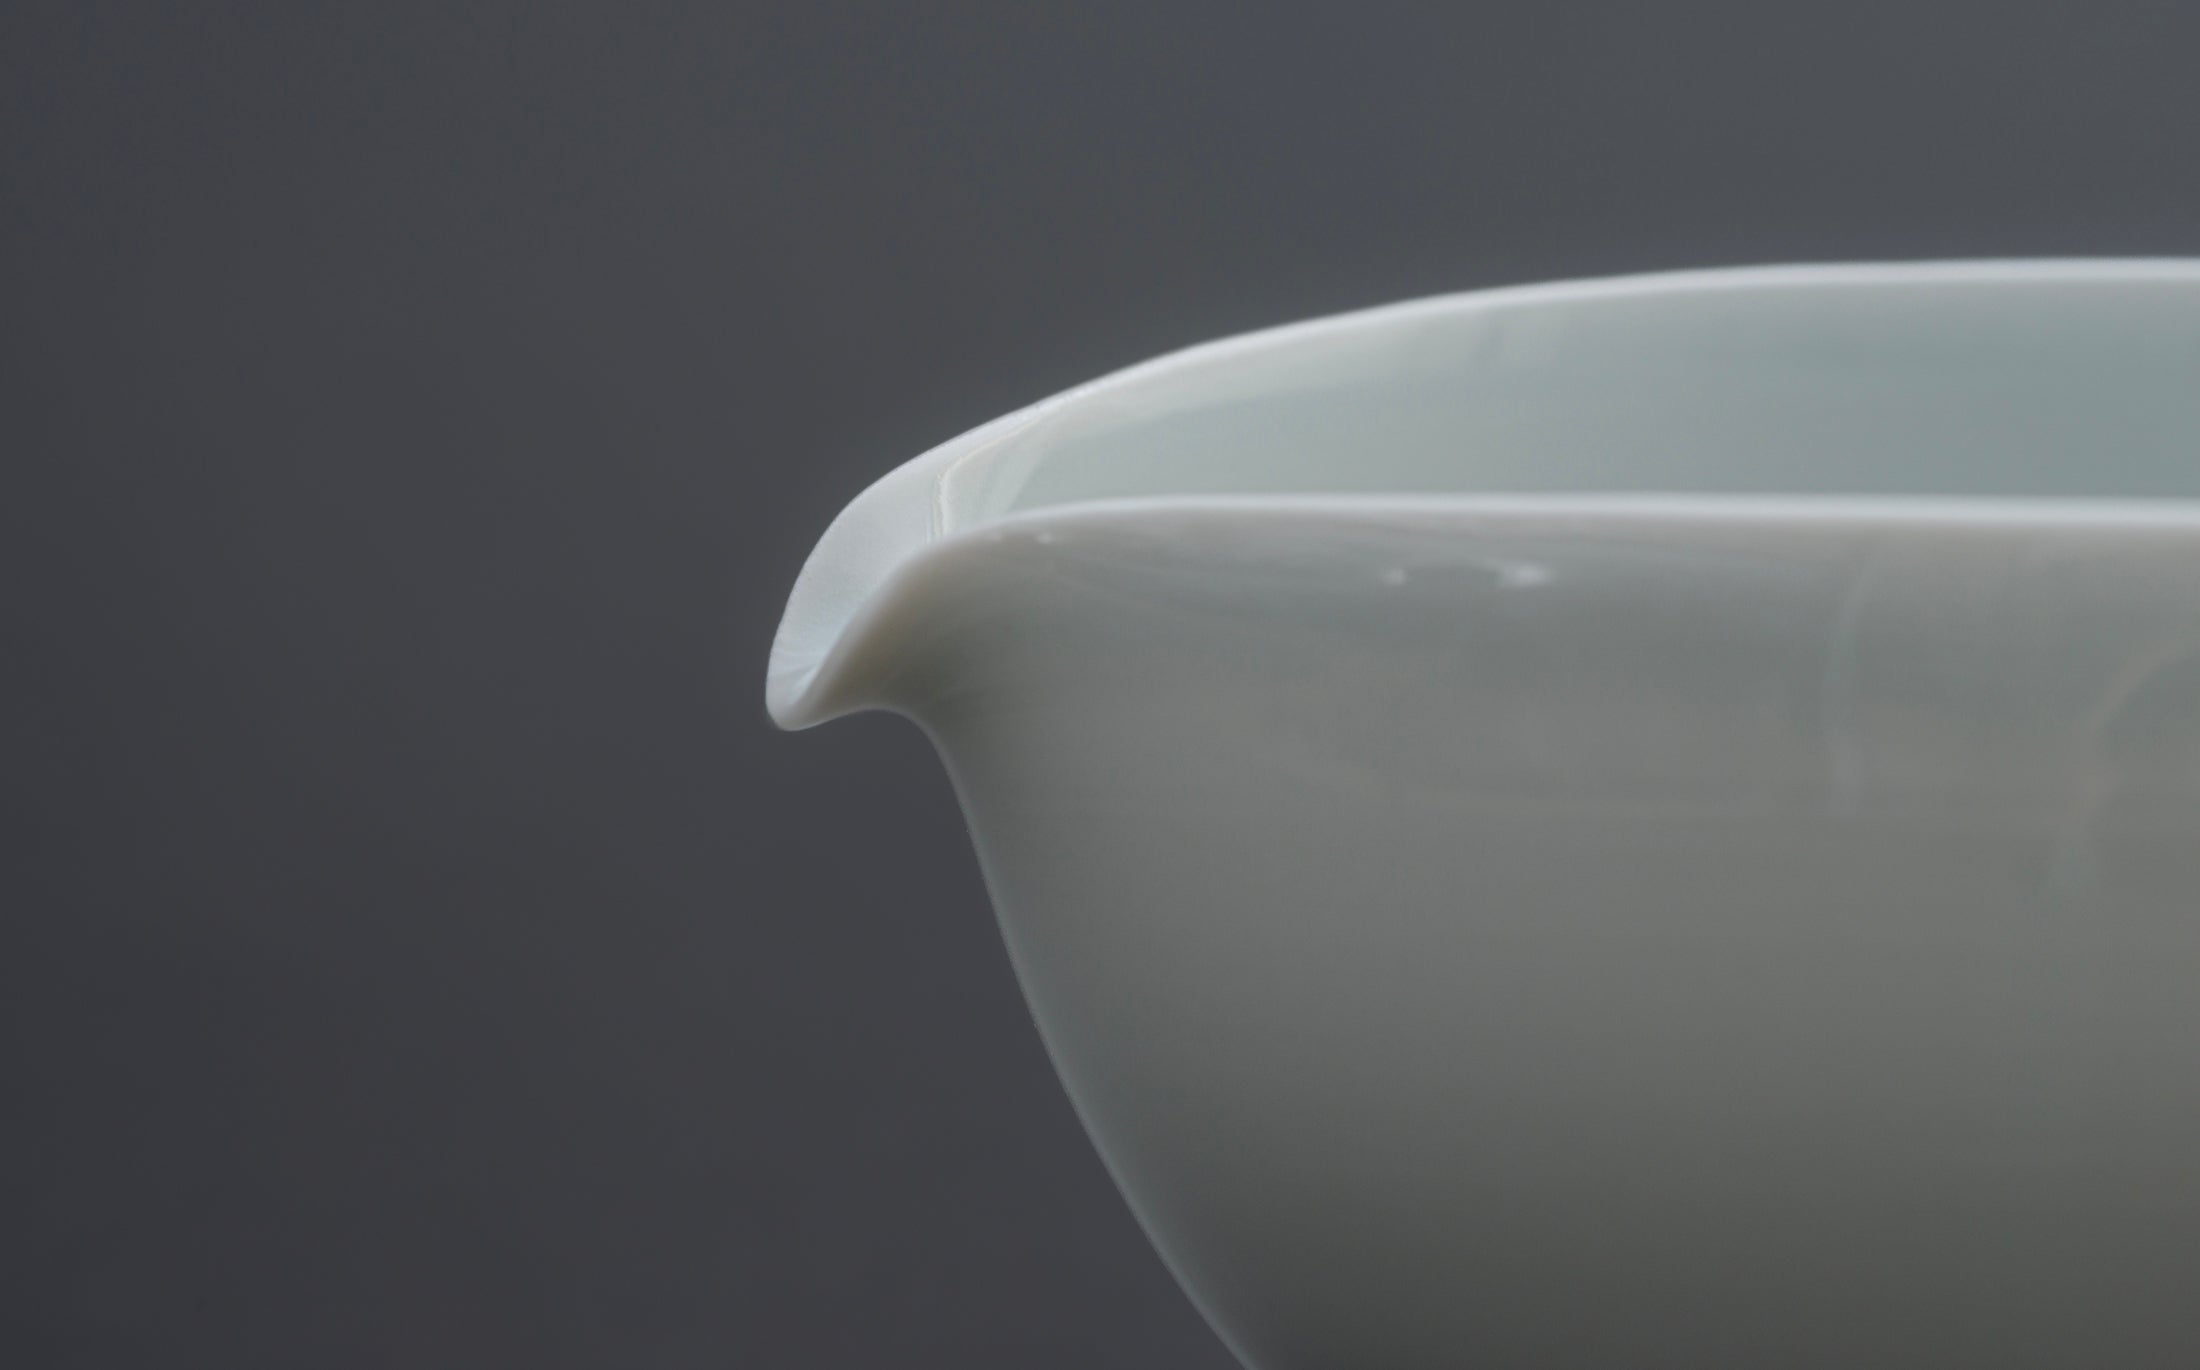 Katsutoshi Mizuno - Porcelain White - Pitcher 015